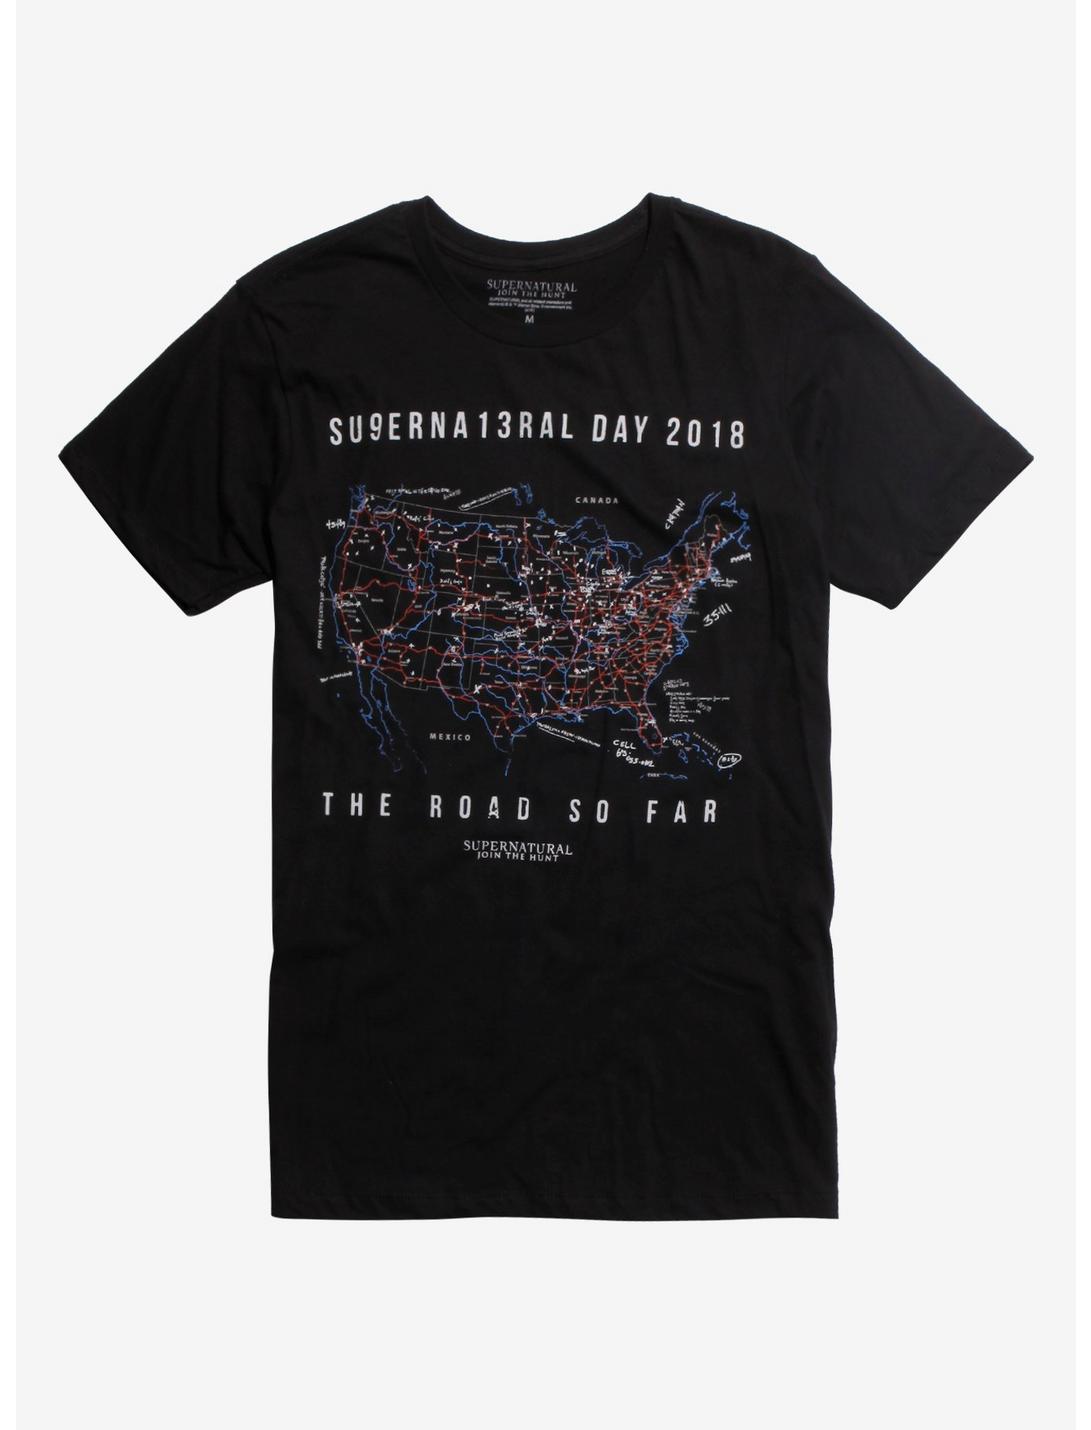 Supernatural Su9erna13ral Day 2018 The Road So Far T-Shirt Hot Topic Exclusive, BLACK, hi-res